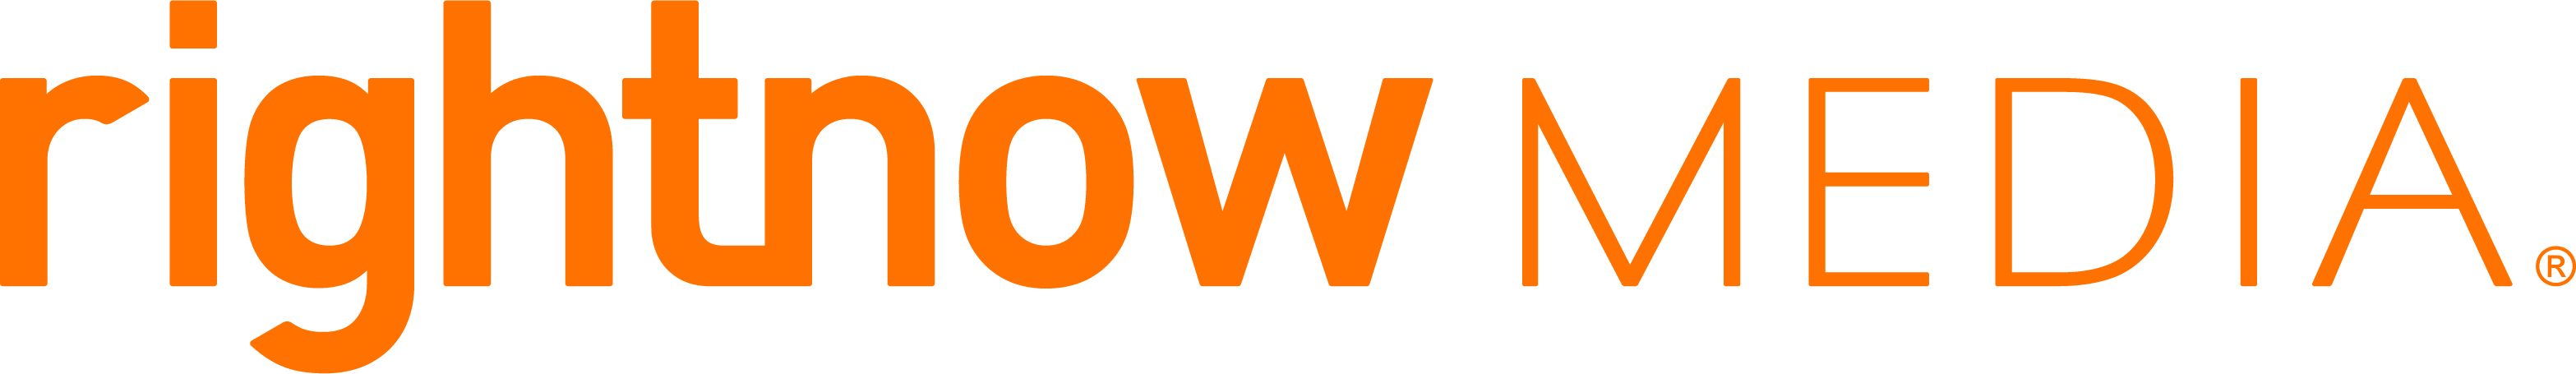 RightNow Media Logo